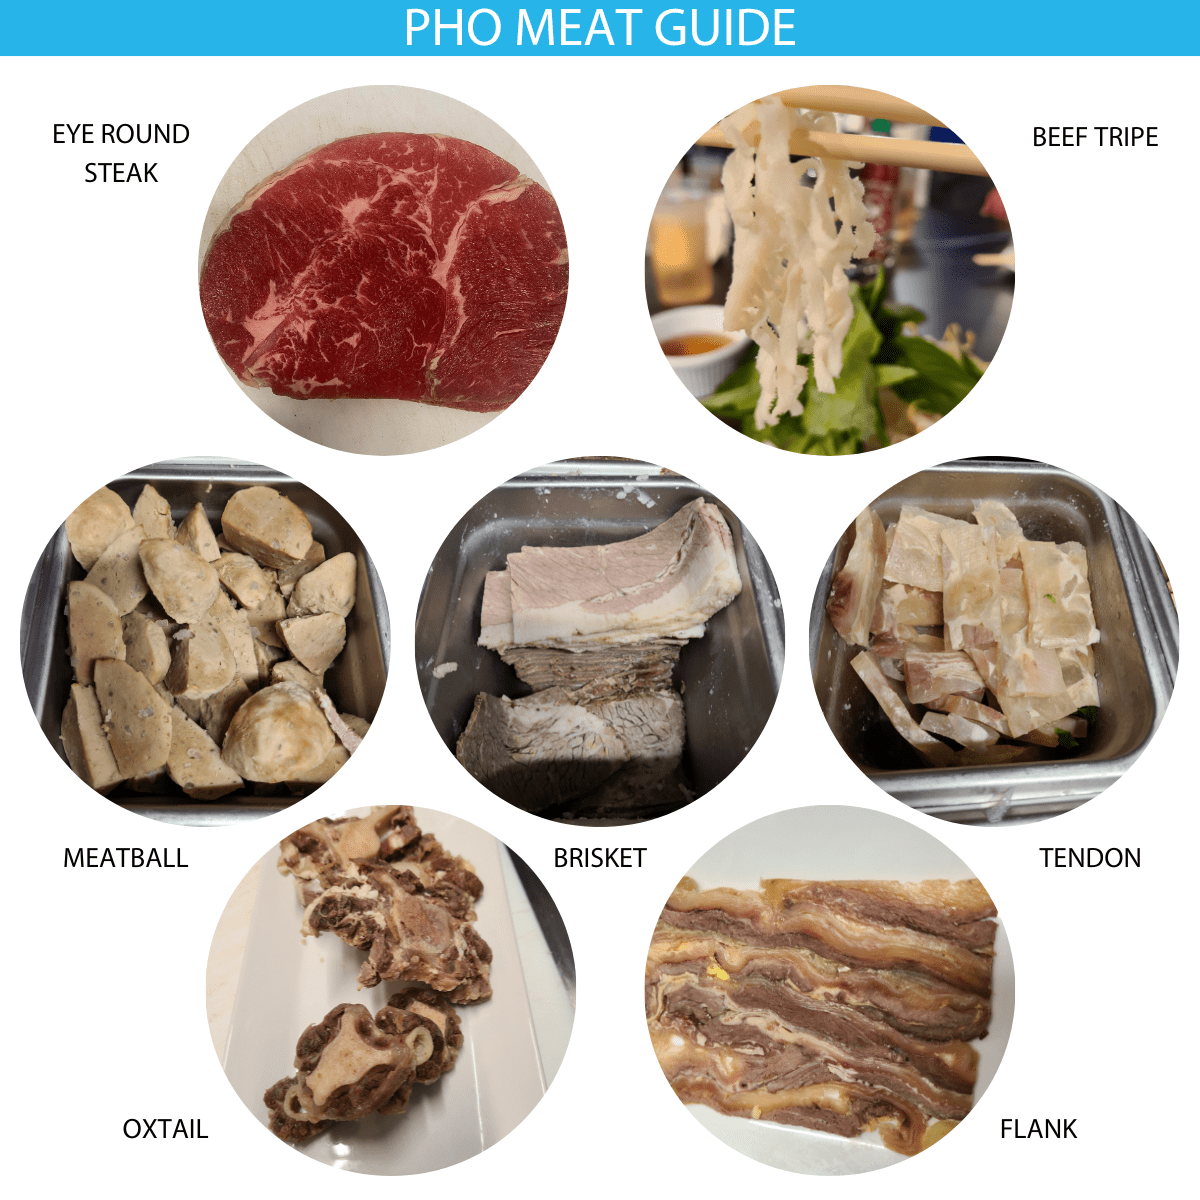 Pho meat guide - brisket, tendon, flank, rare eye round steak, tendon, oxtail,